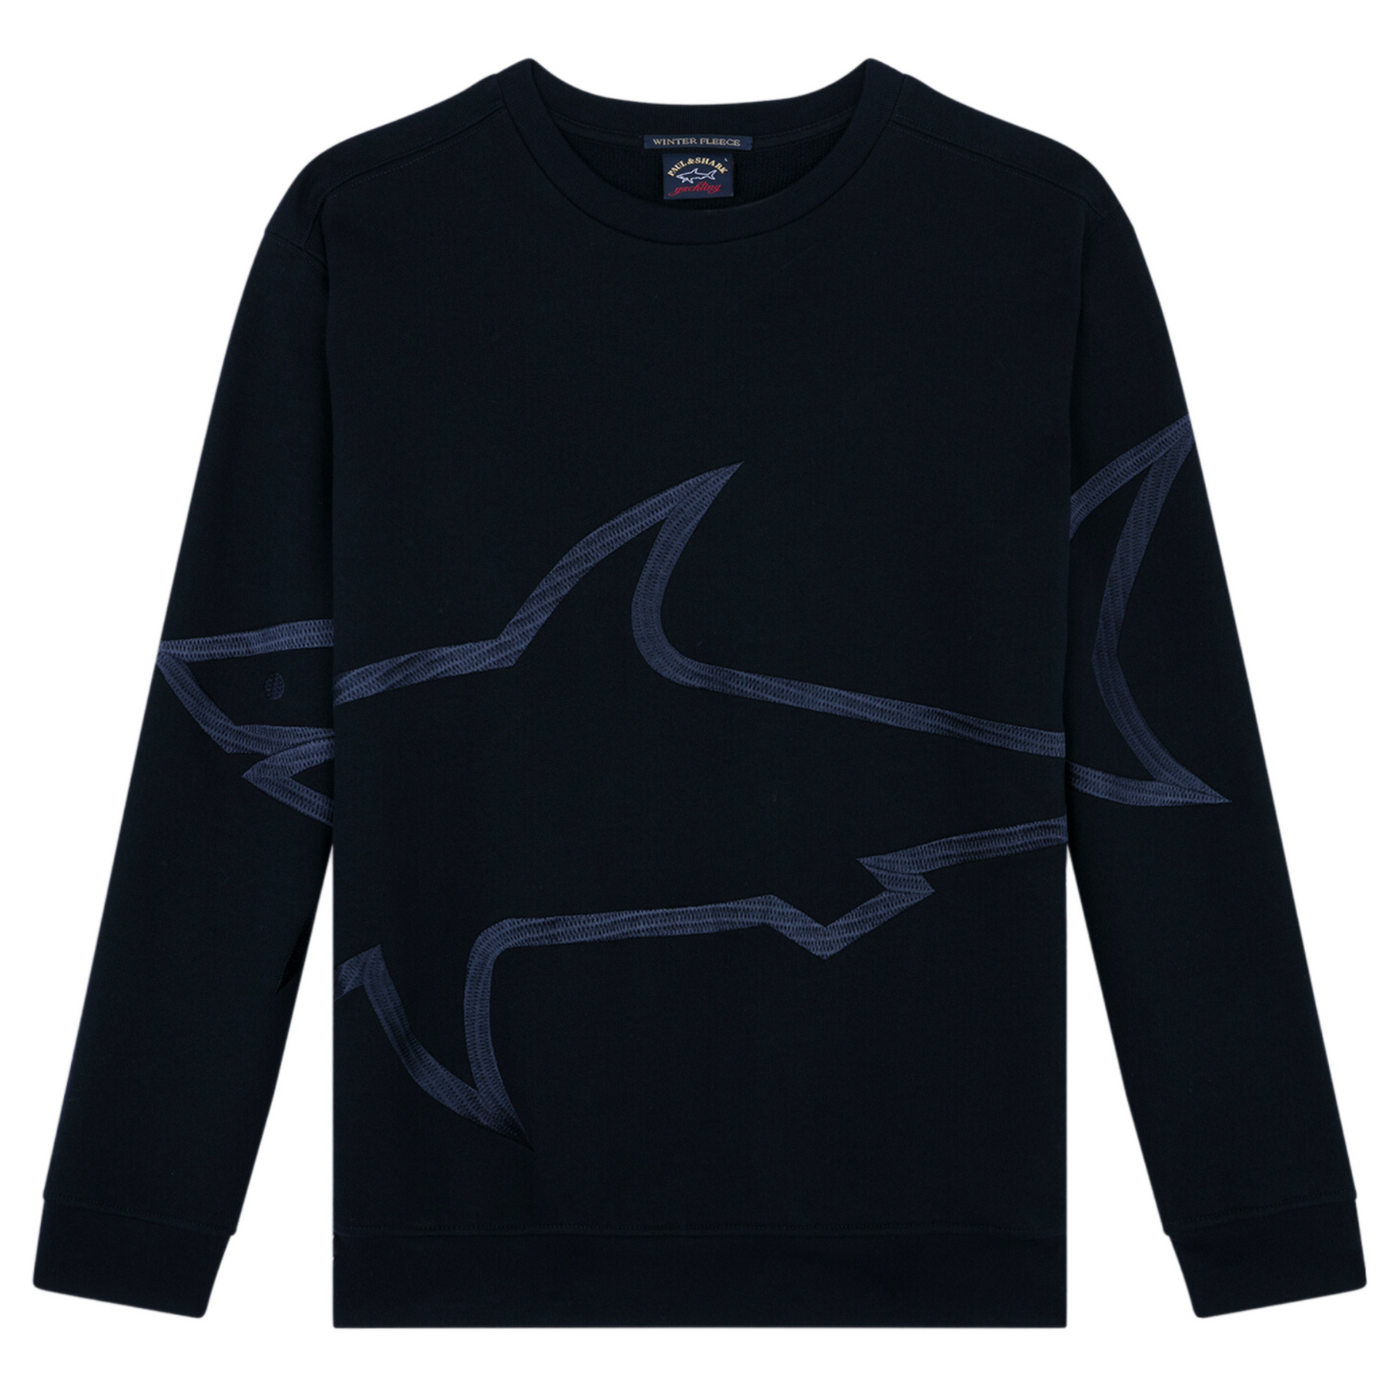 Paul & Shark Sweatshirt Navy